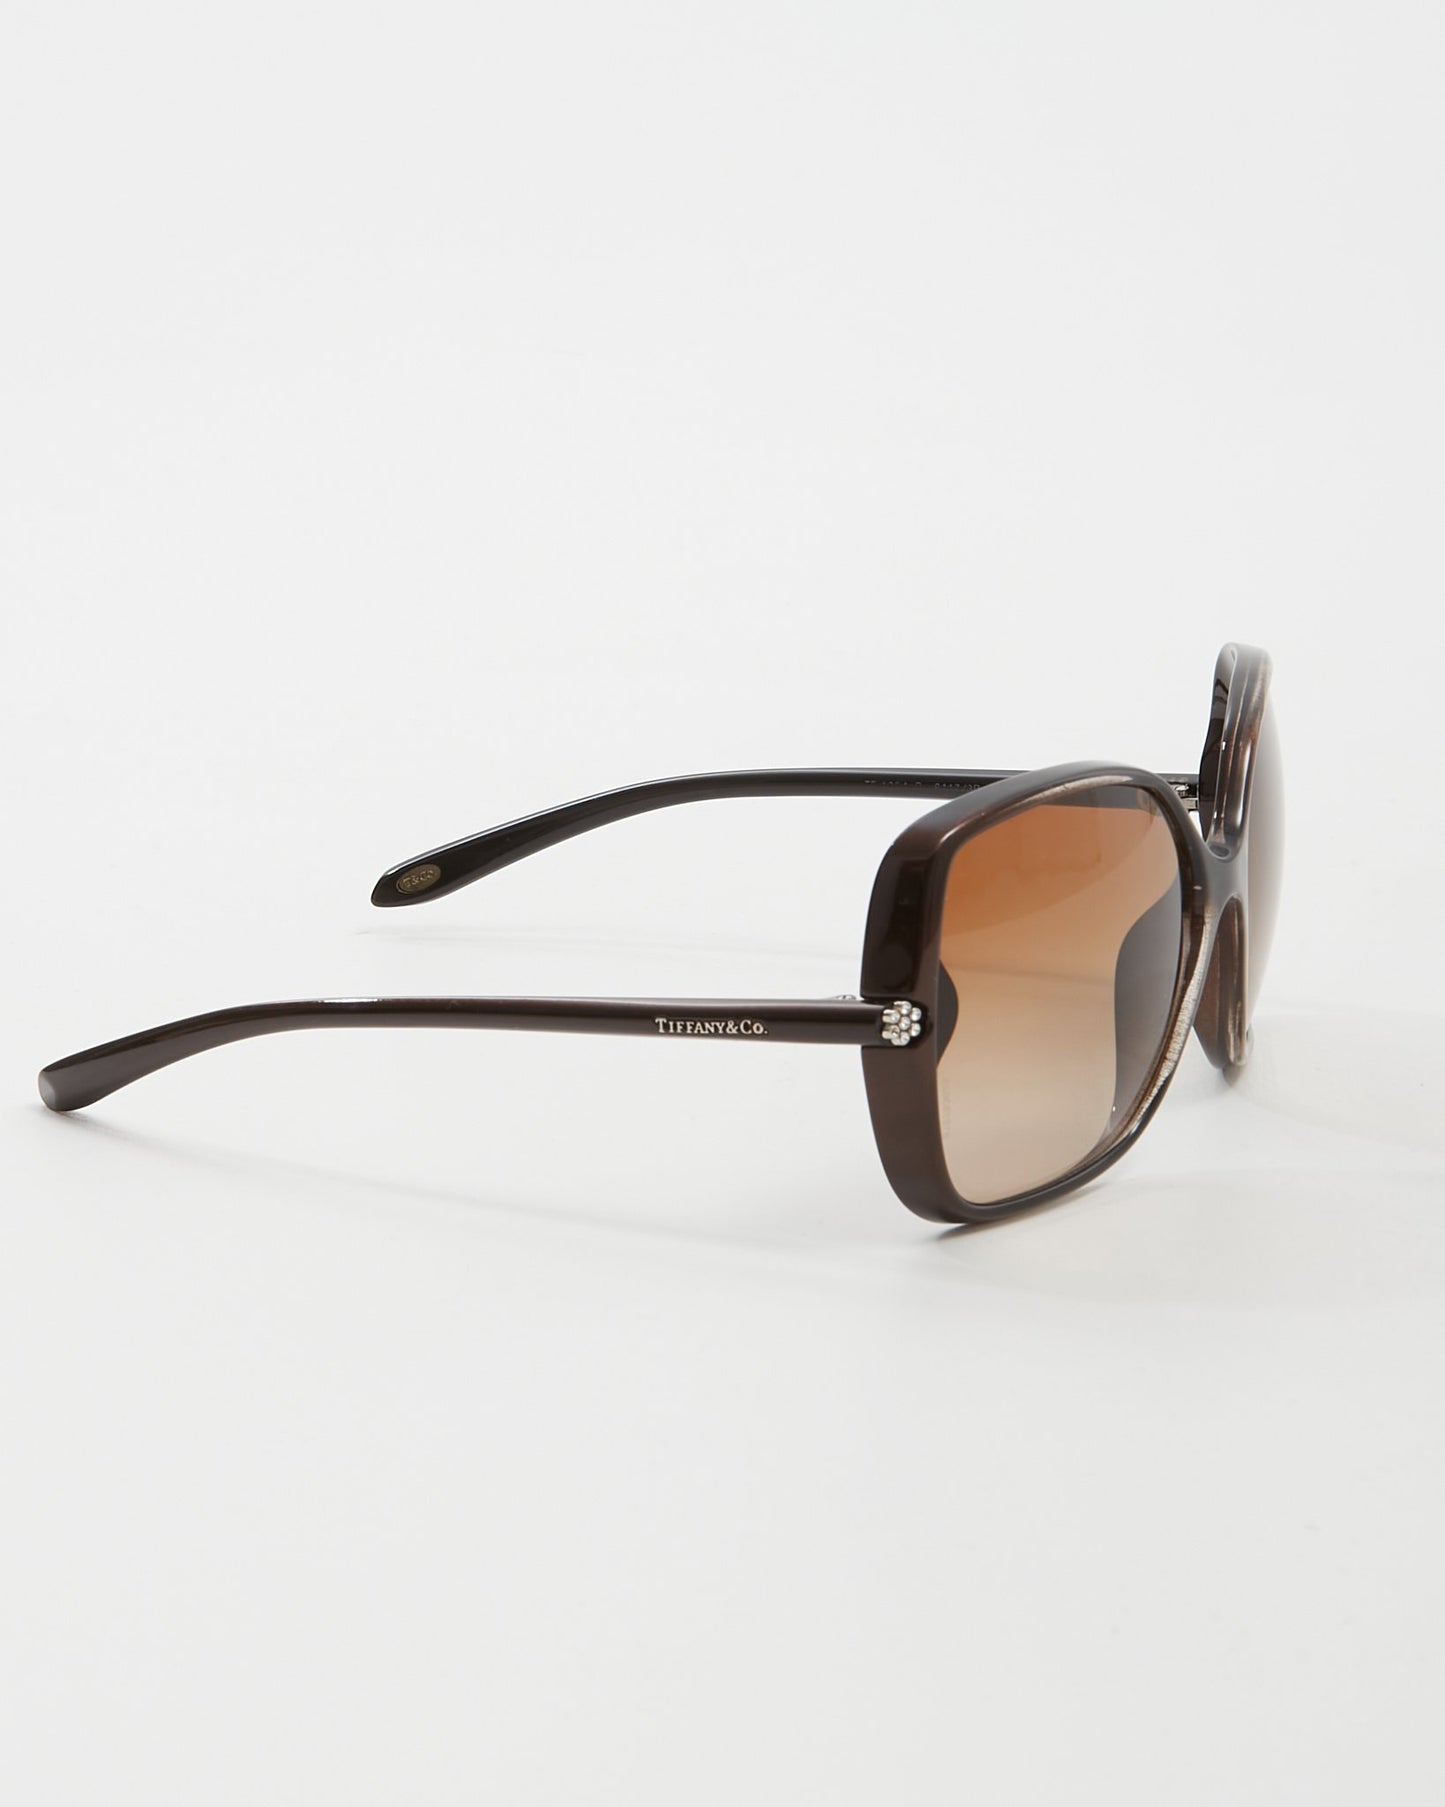 Tiffany & Co Dark Bronze Metallic Round Sunglasses